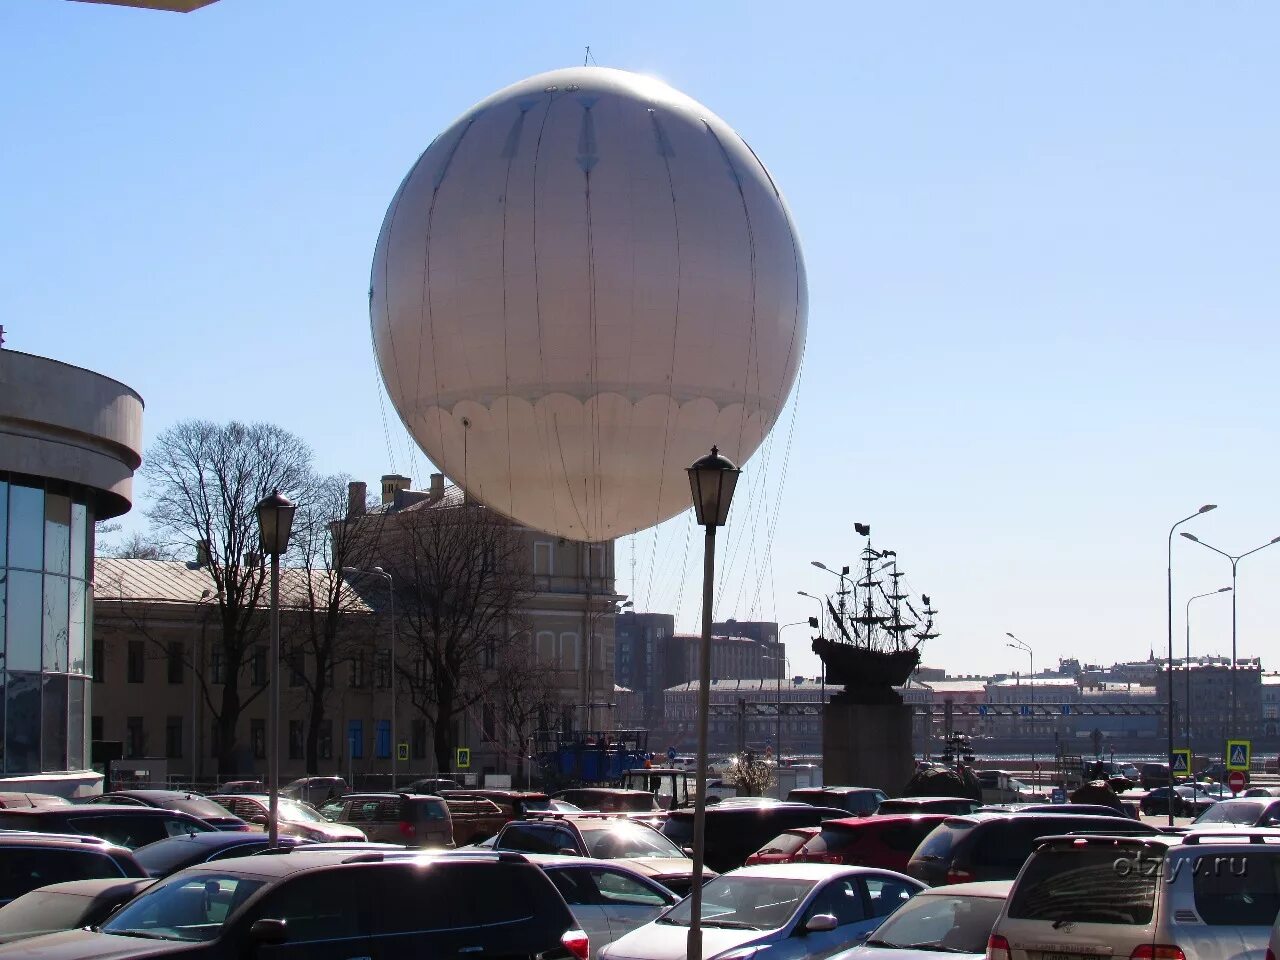 Санкт петербург на воздушном шаре. Аэролифт в Санкт-Петербурге. Аэролифт ВДНХ. Воздушный шар на гостинице Санкт-Петербург. Воздушный шар в Питере.